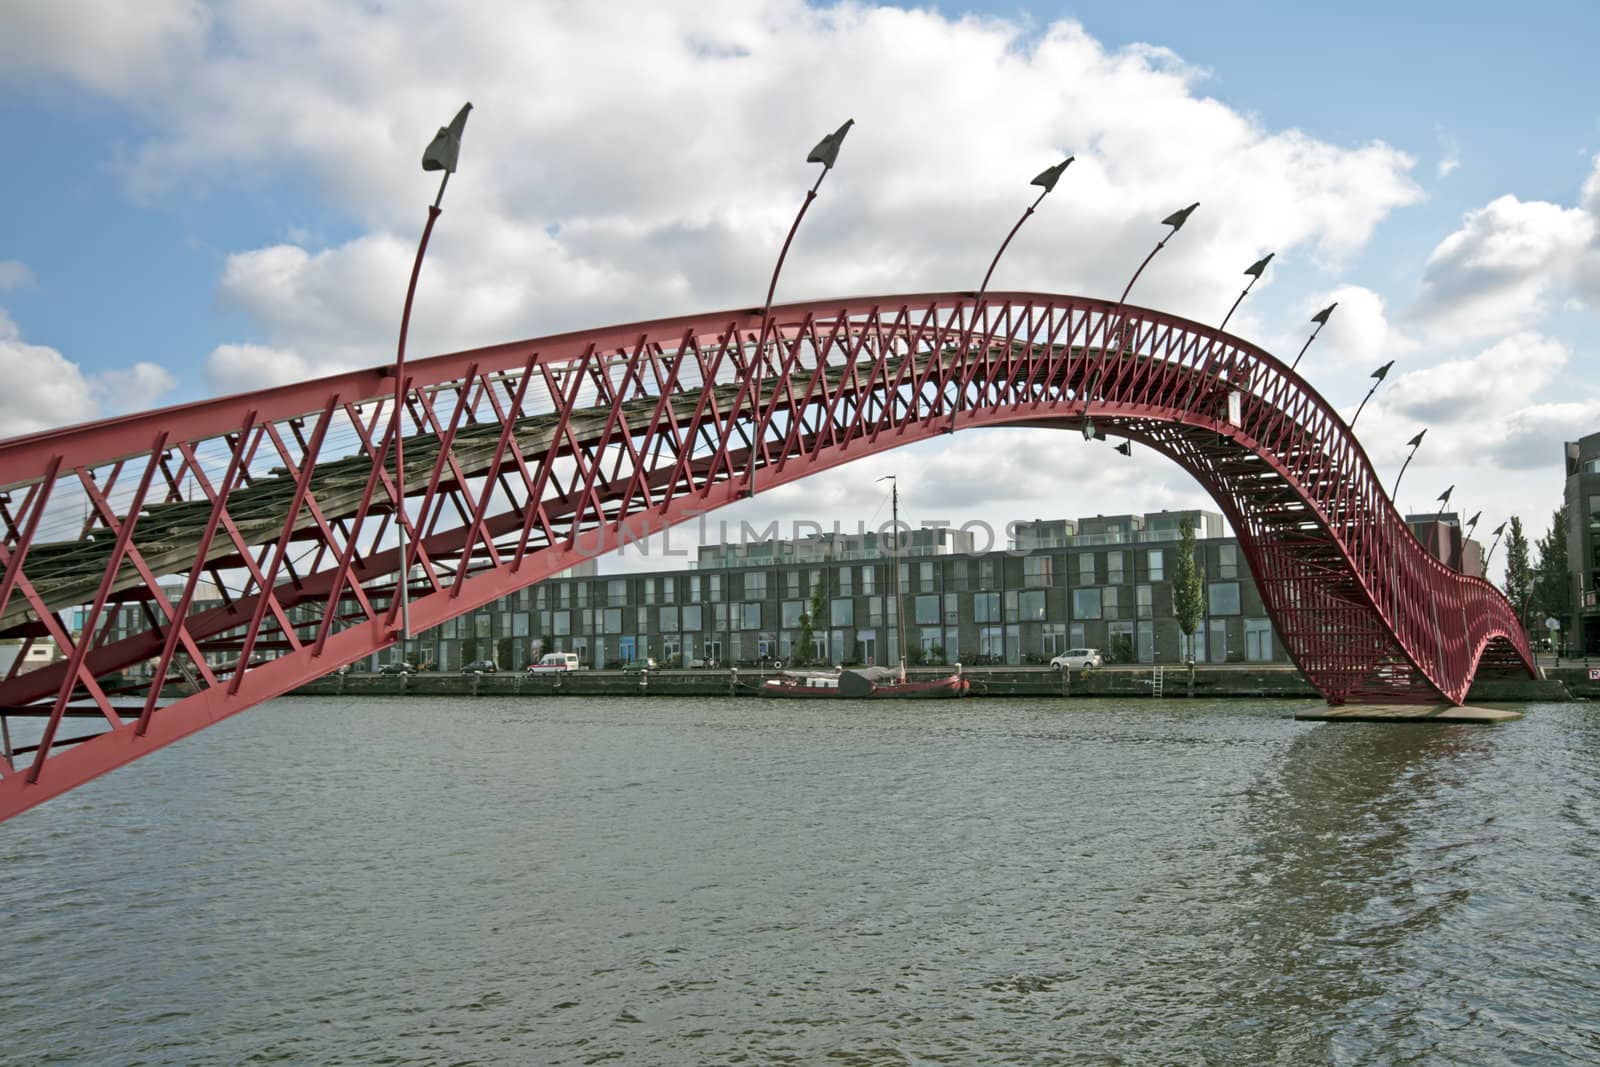 Python bridge in Amsterdam the Netherlands